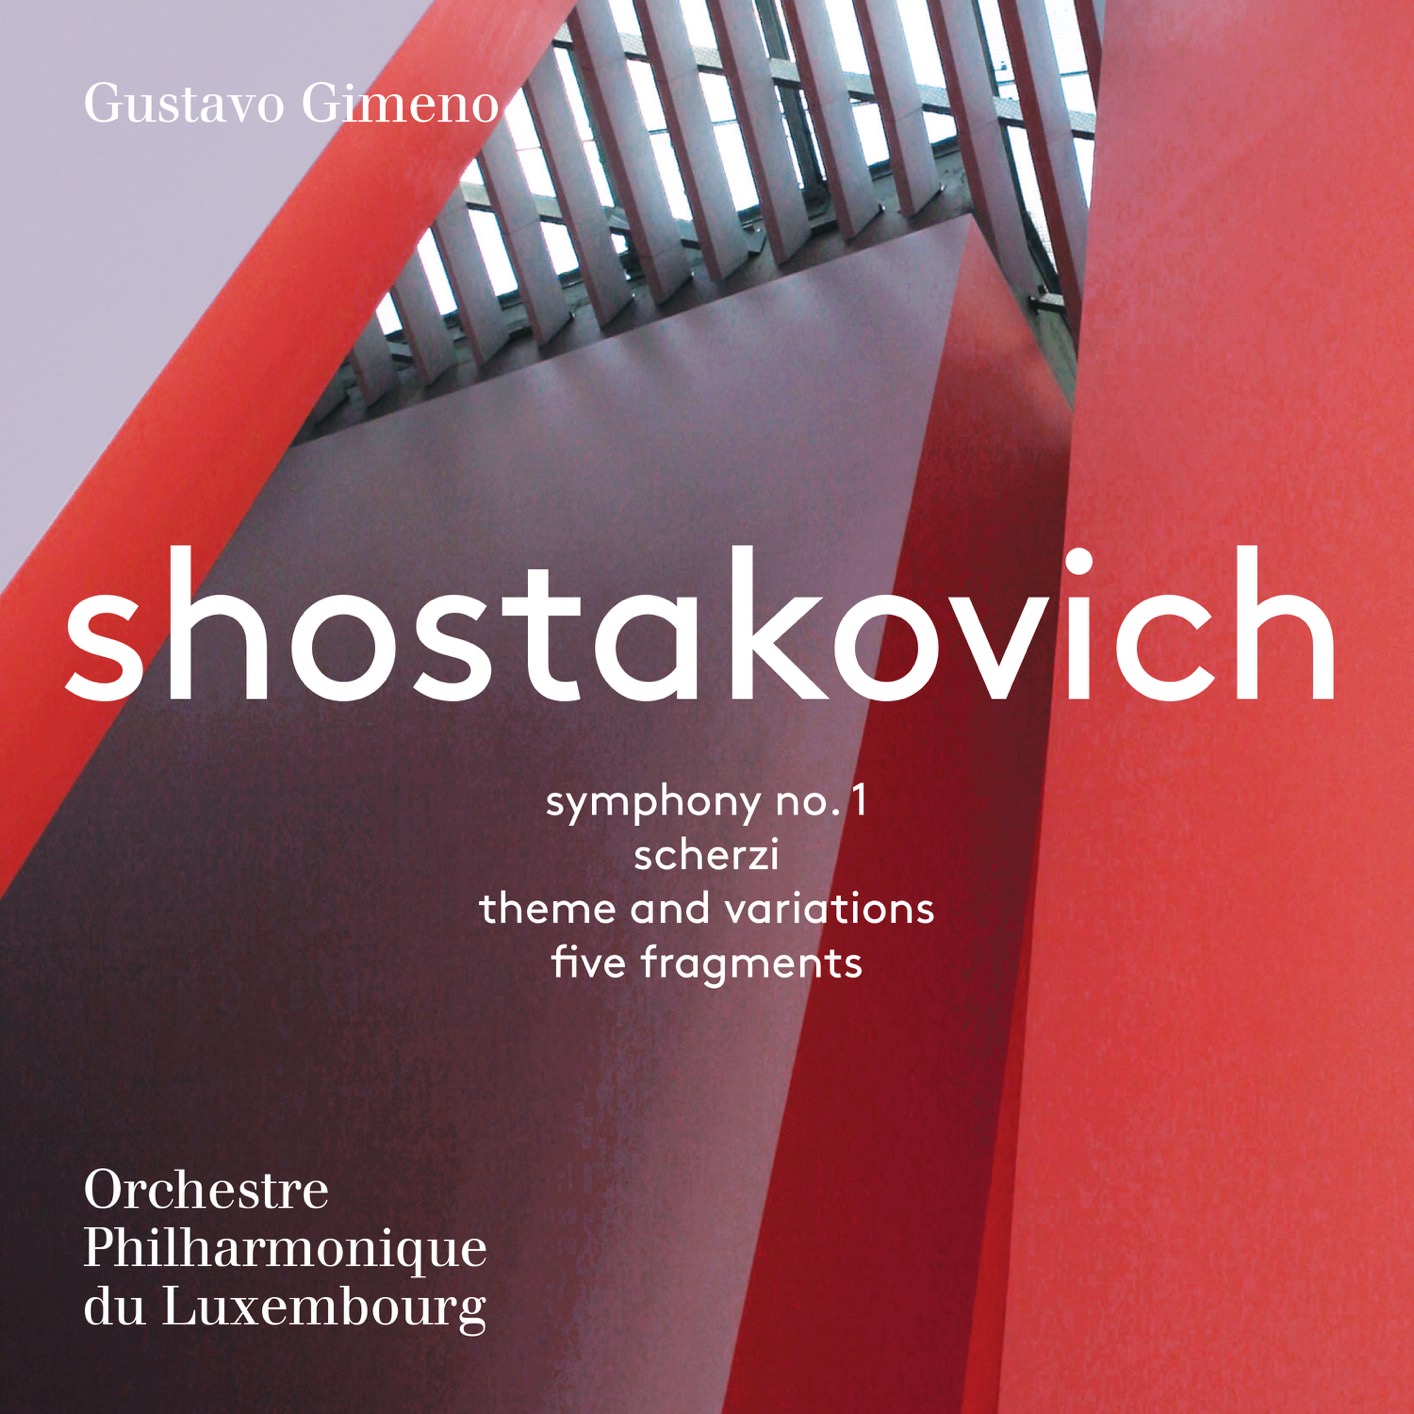 Orchestre Philharmonique du Luxembourg, Gustavo Gimeno – Shostakovich: Symphony No. 1, Scherzi, Theme and Variations & 5 Fragments (2012) DSF DSD64